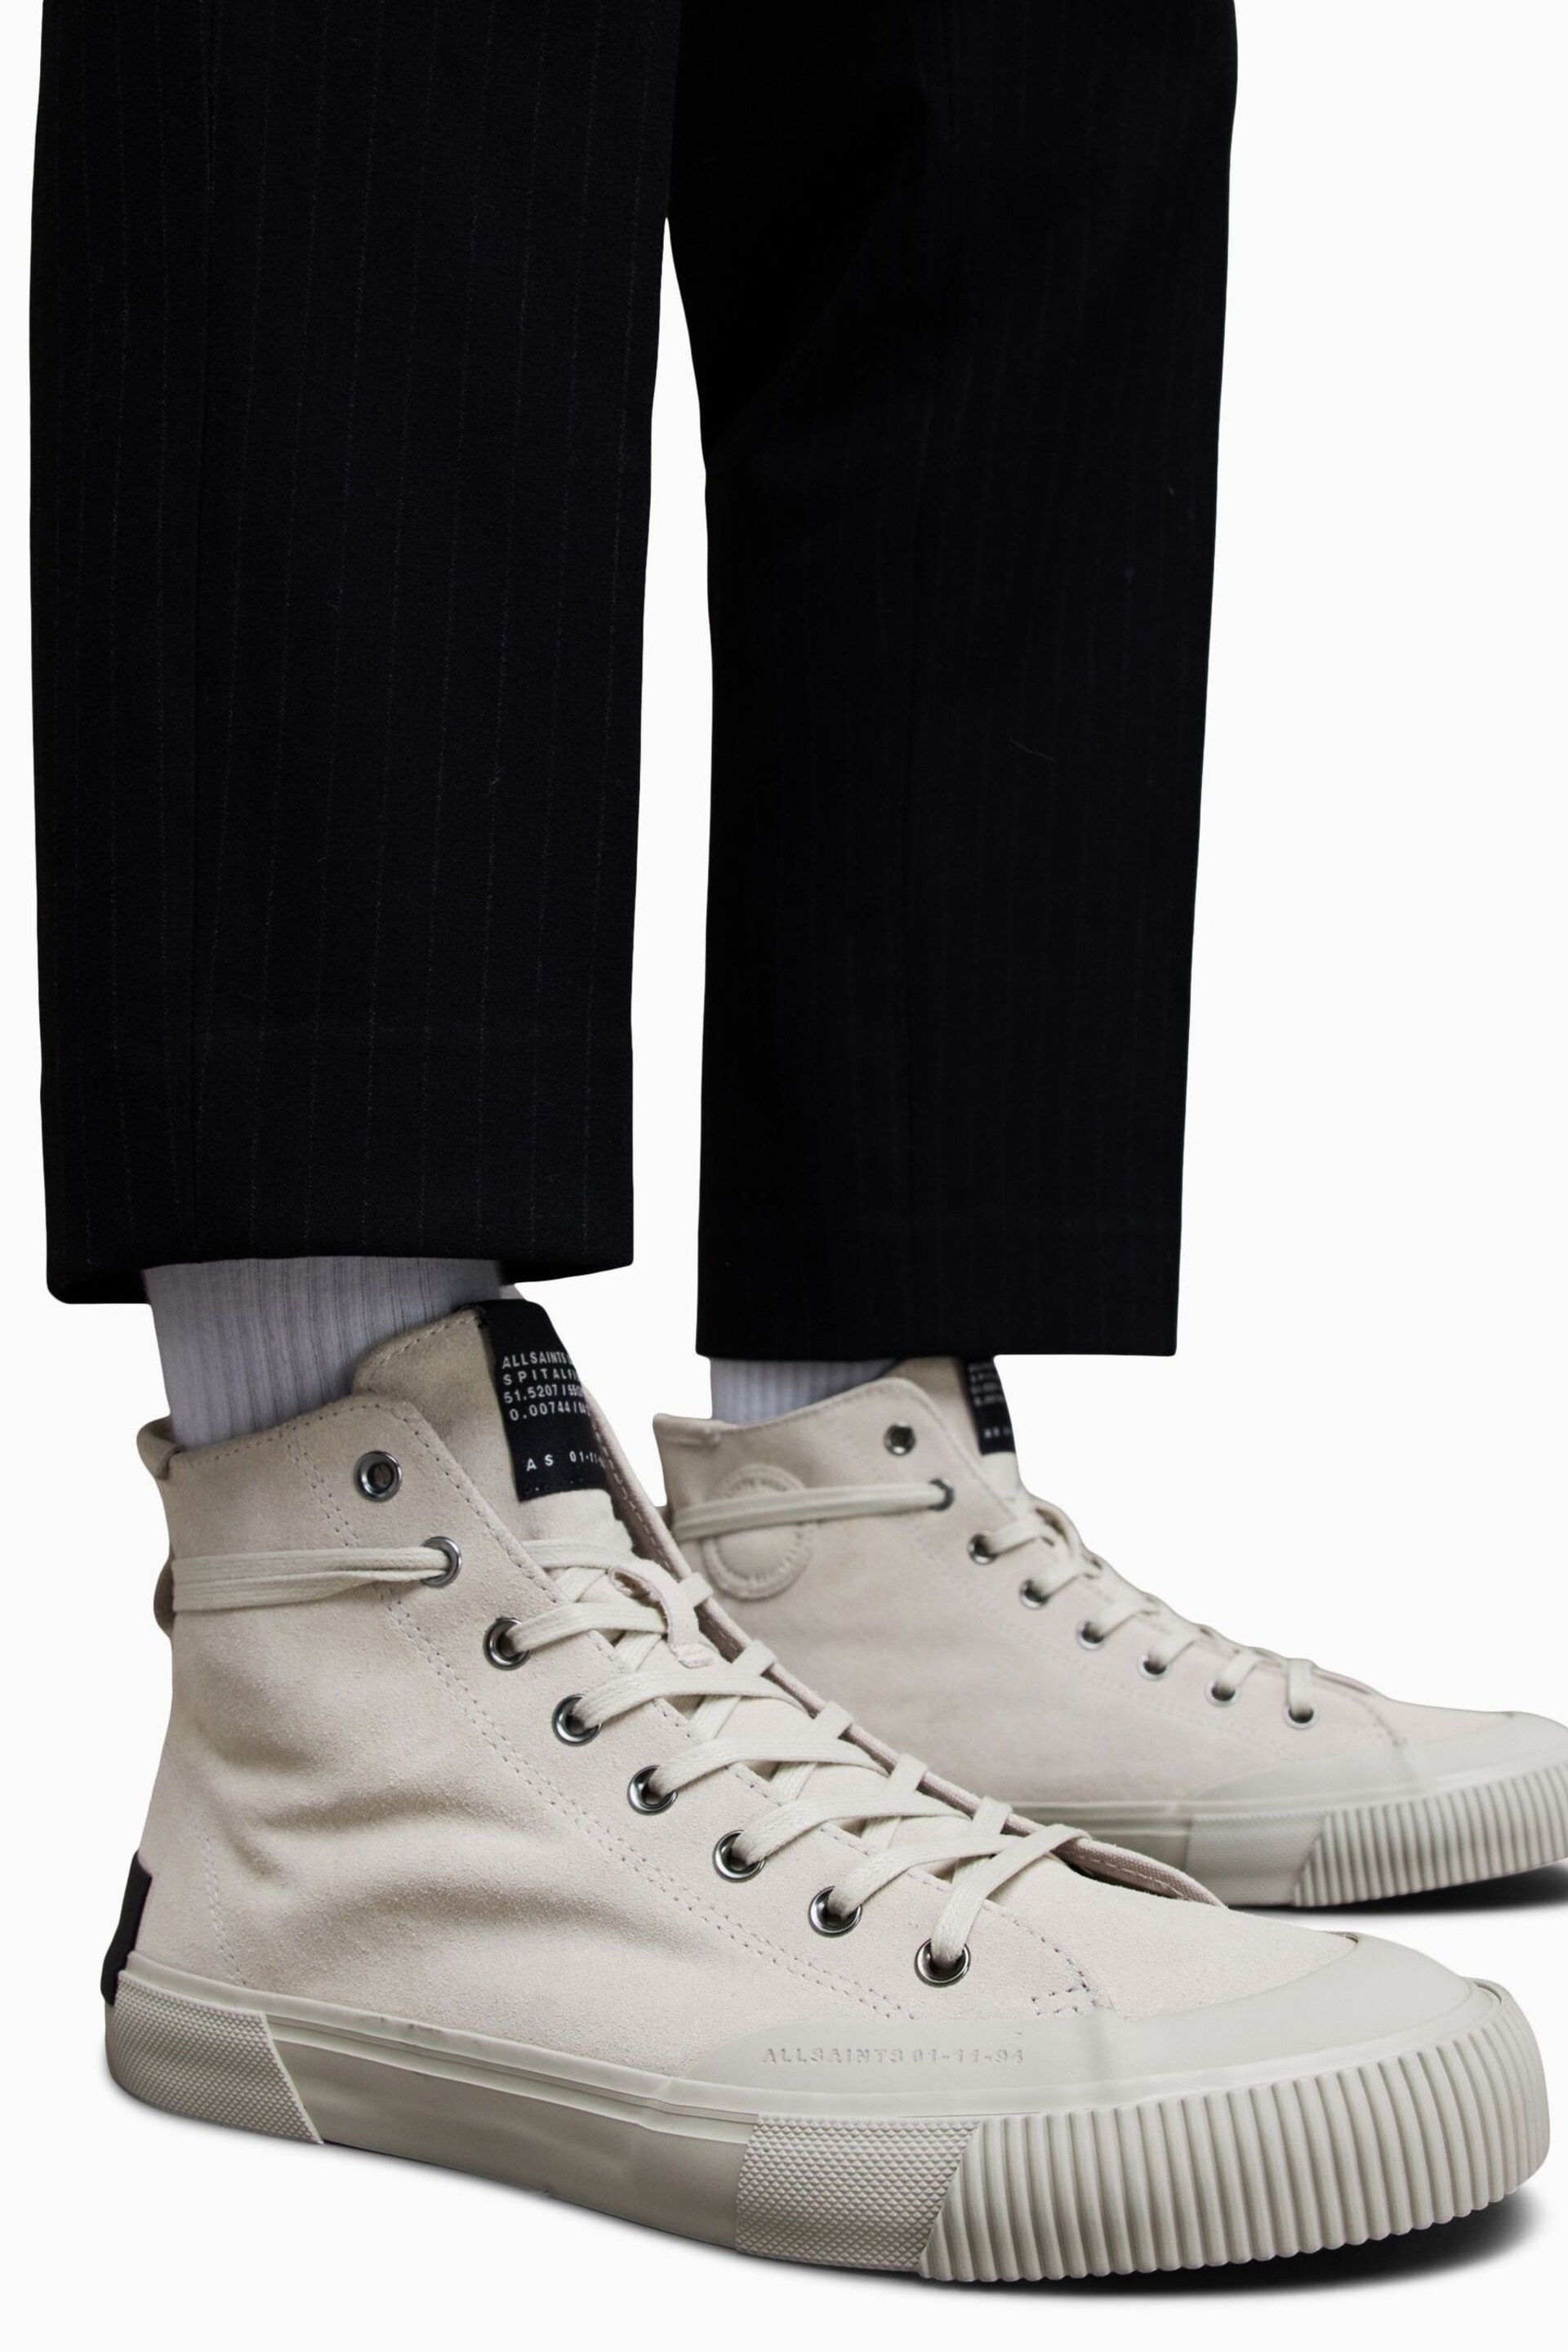 AllSaints White Dumont Suede Shoes - Image 6 of 7